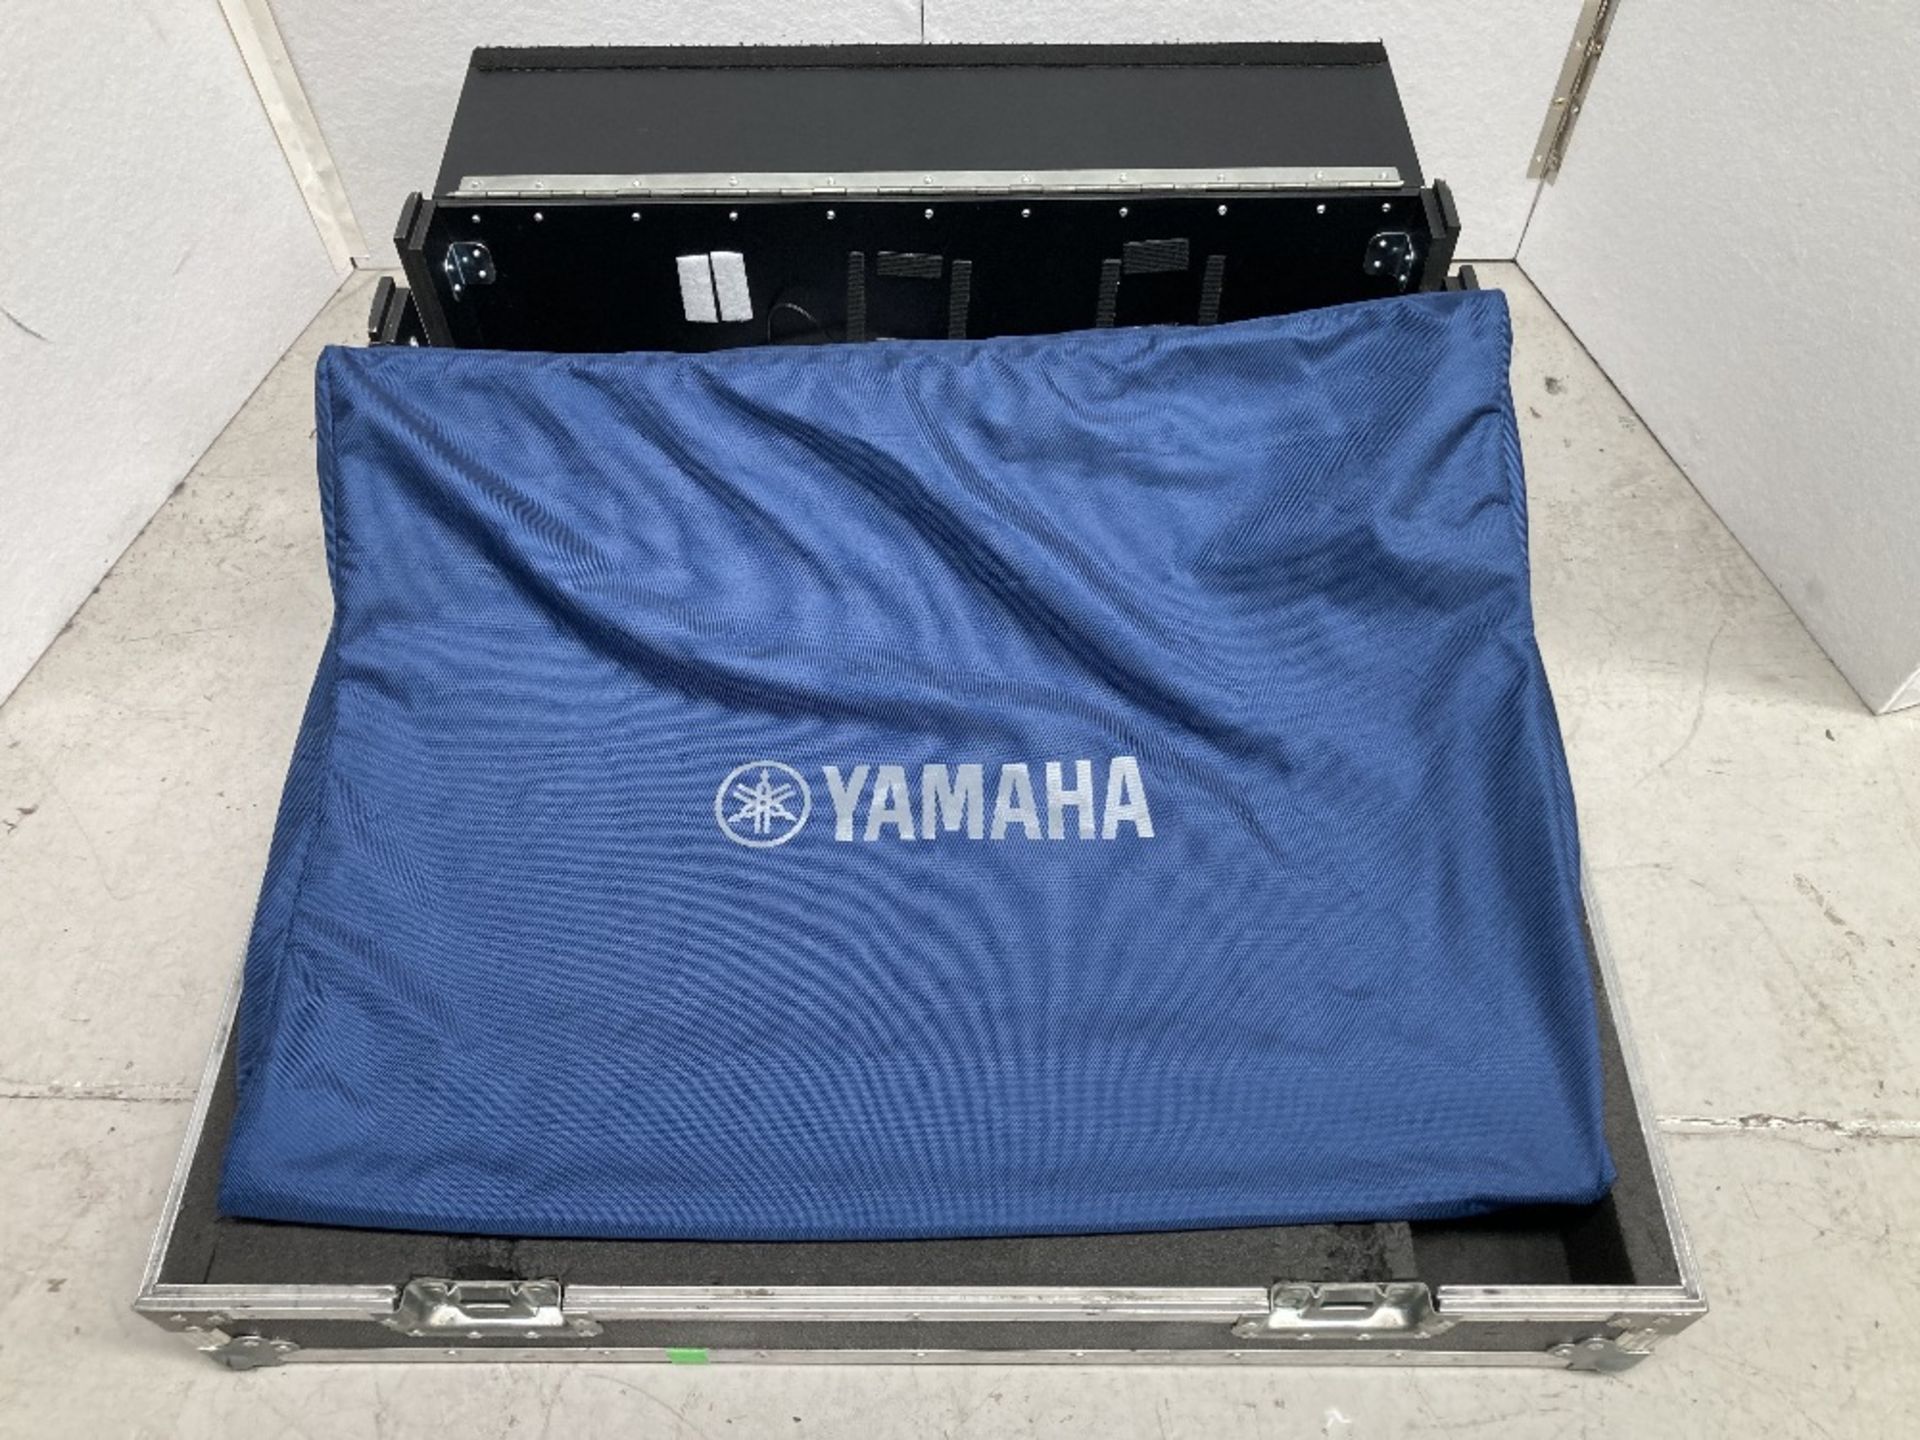 Yamaha QL5 Digital Mixing Console & Heavy Duty Mobile Flight Case - Image 14 of 15